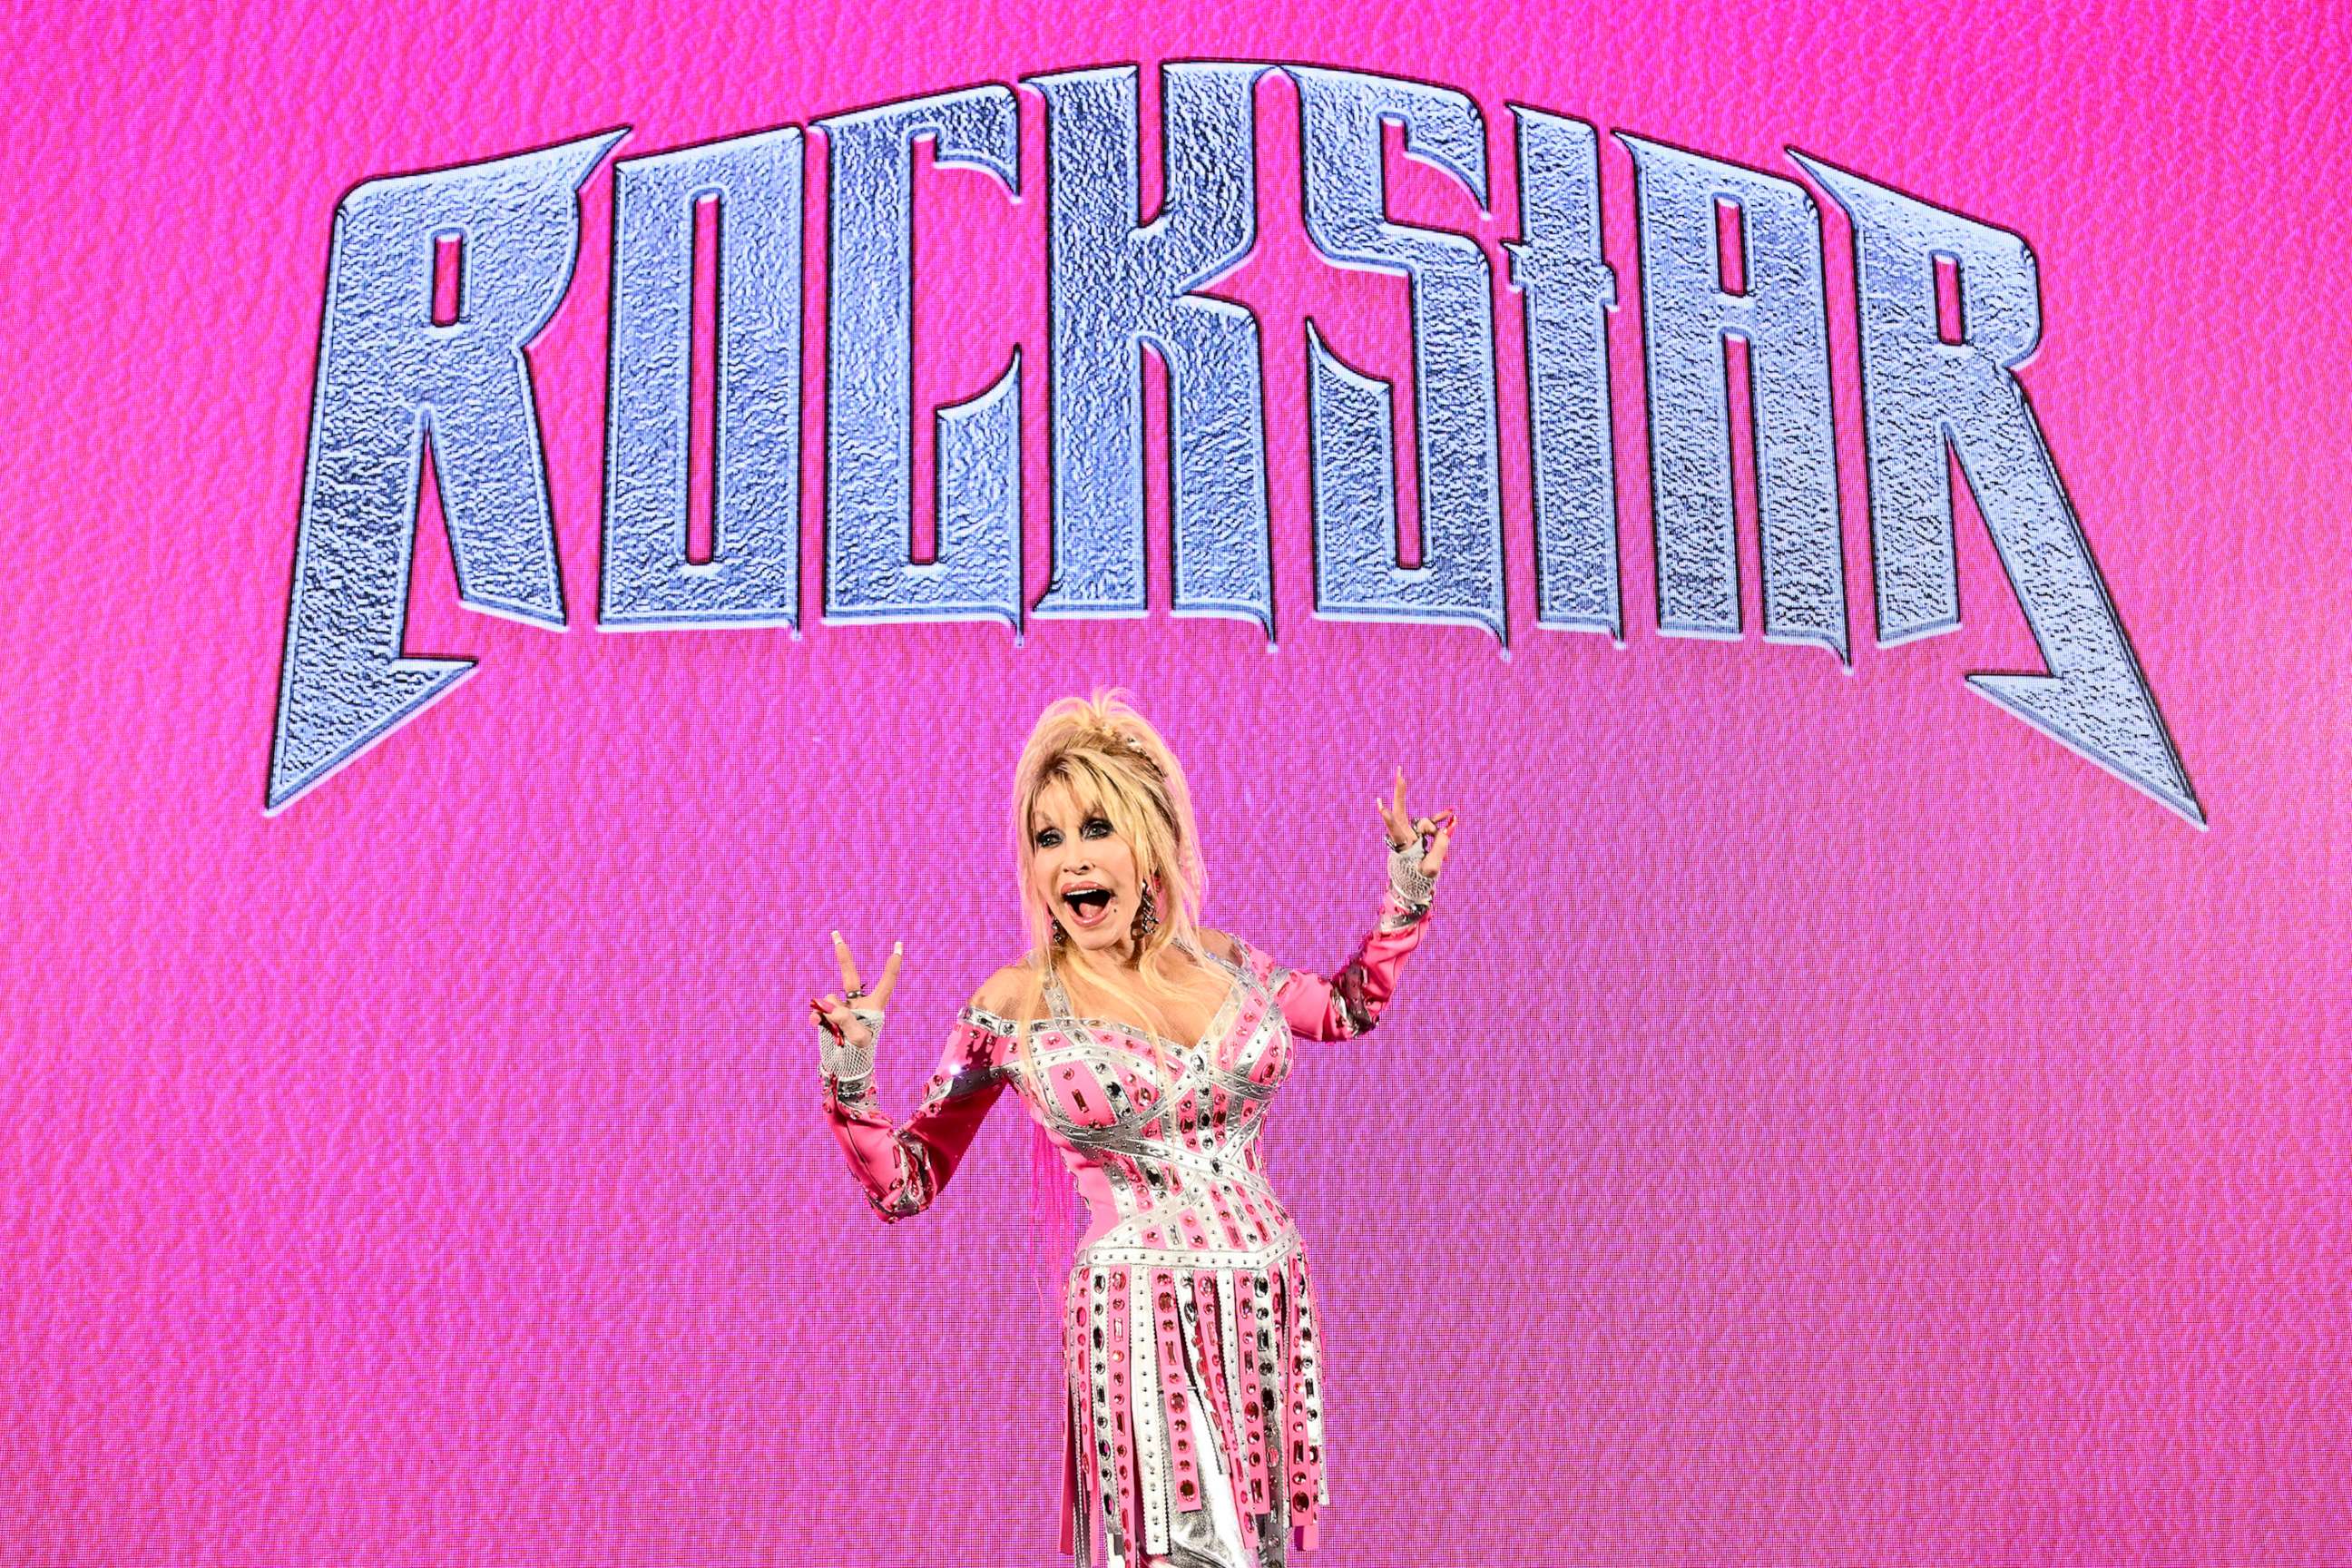 Dolly Parton Announces 'Rockstar' Album and Track List